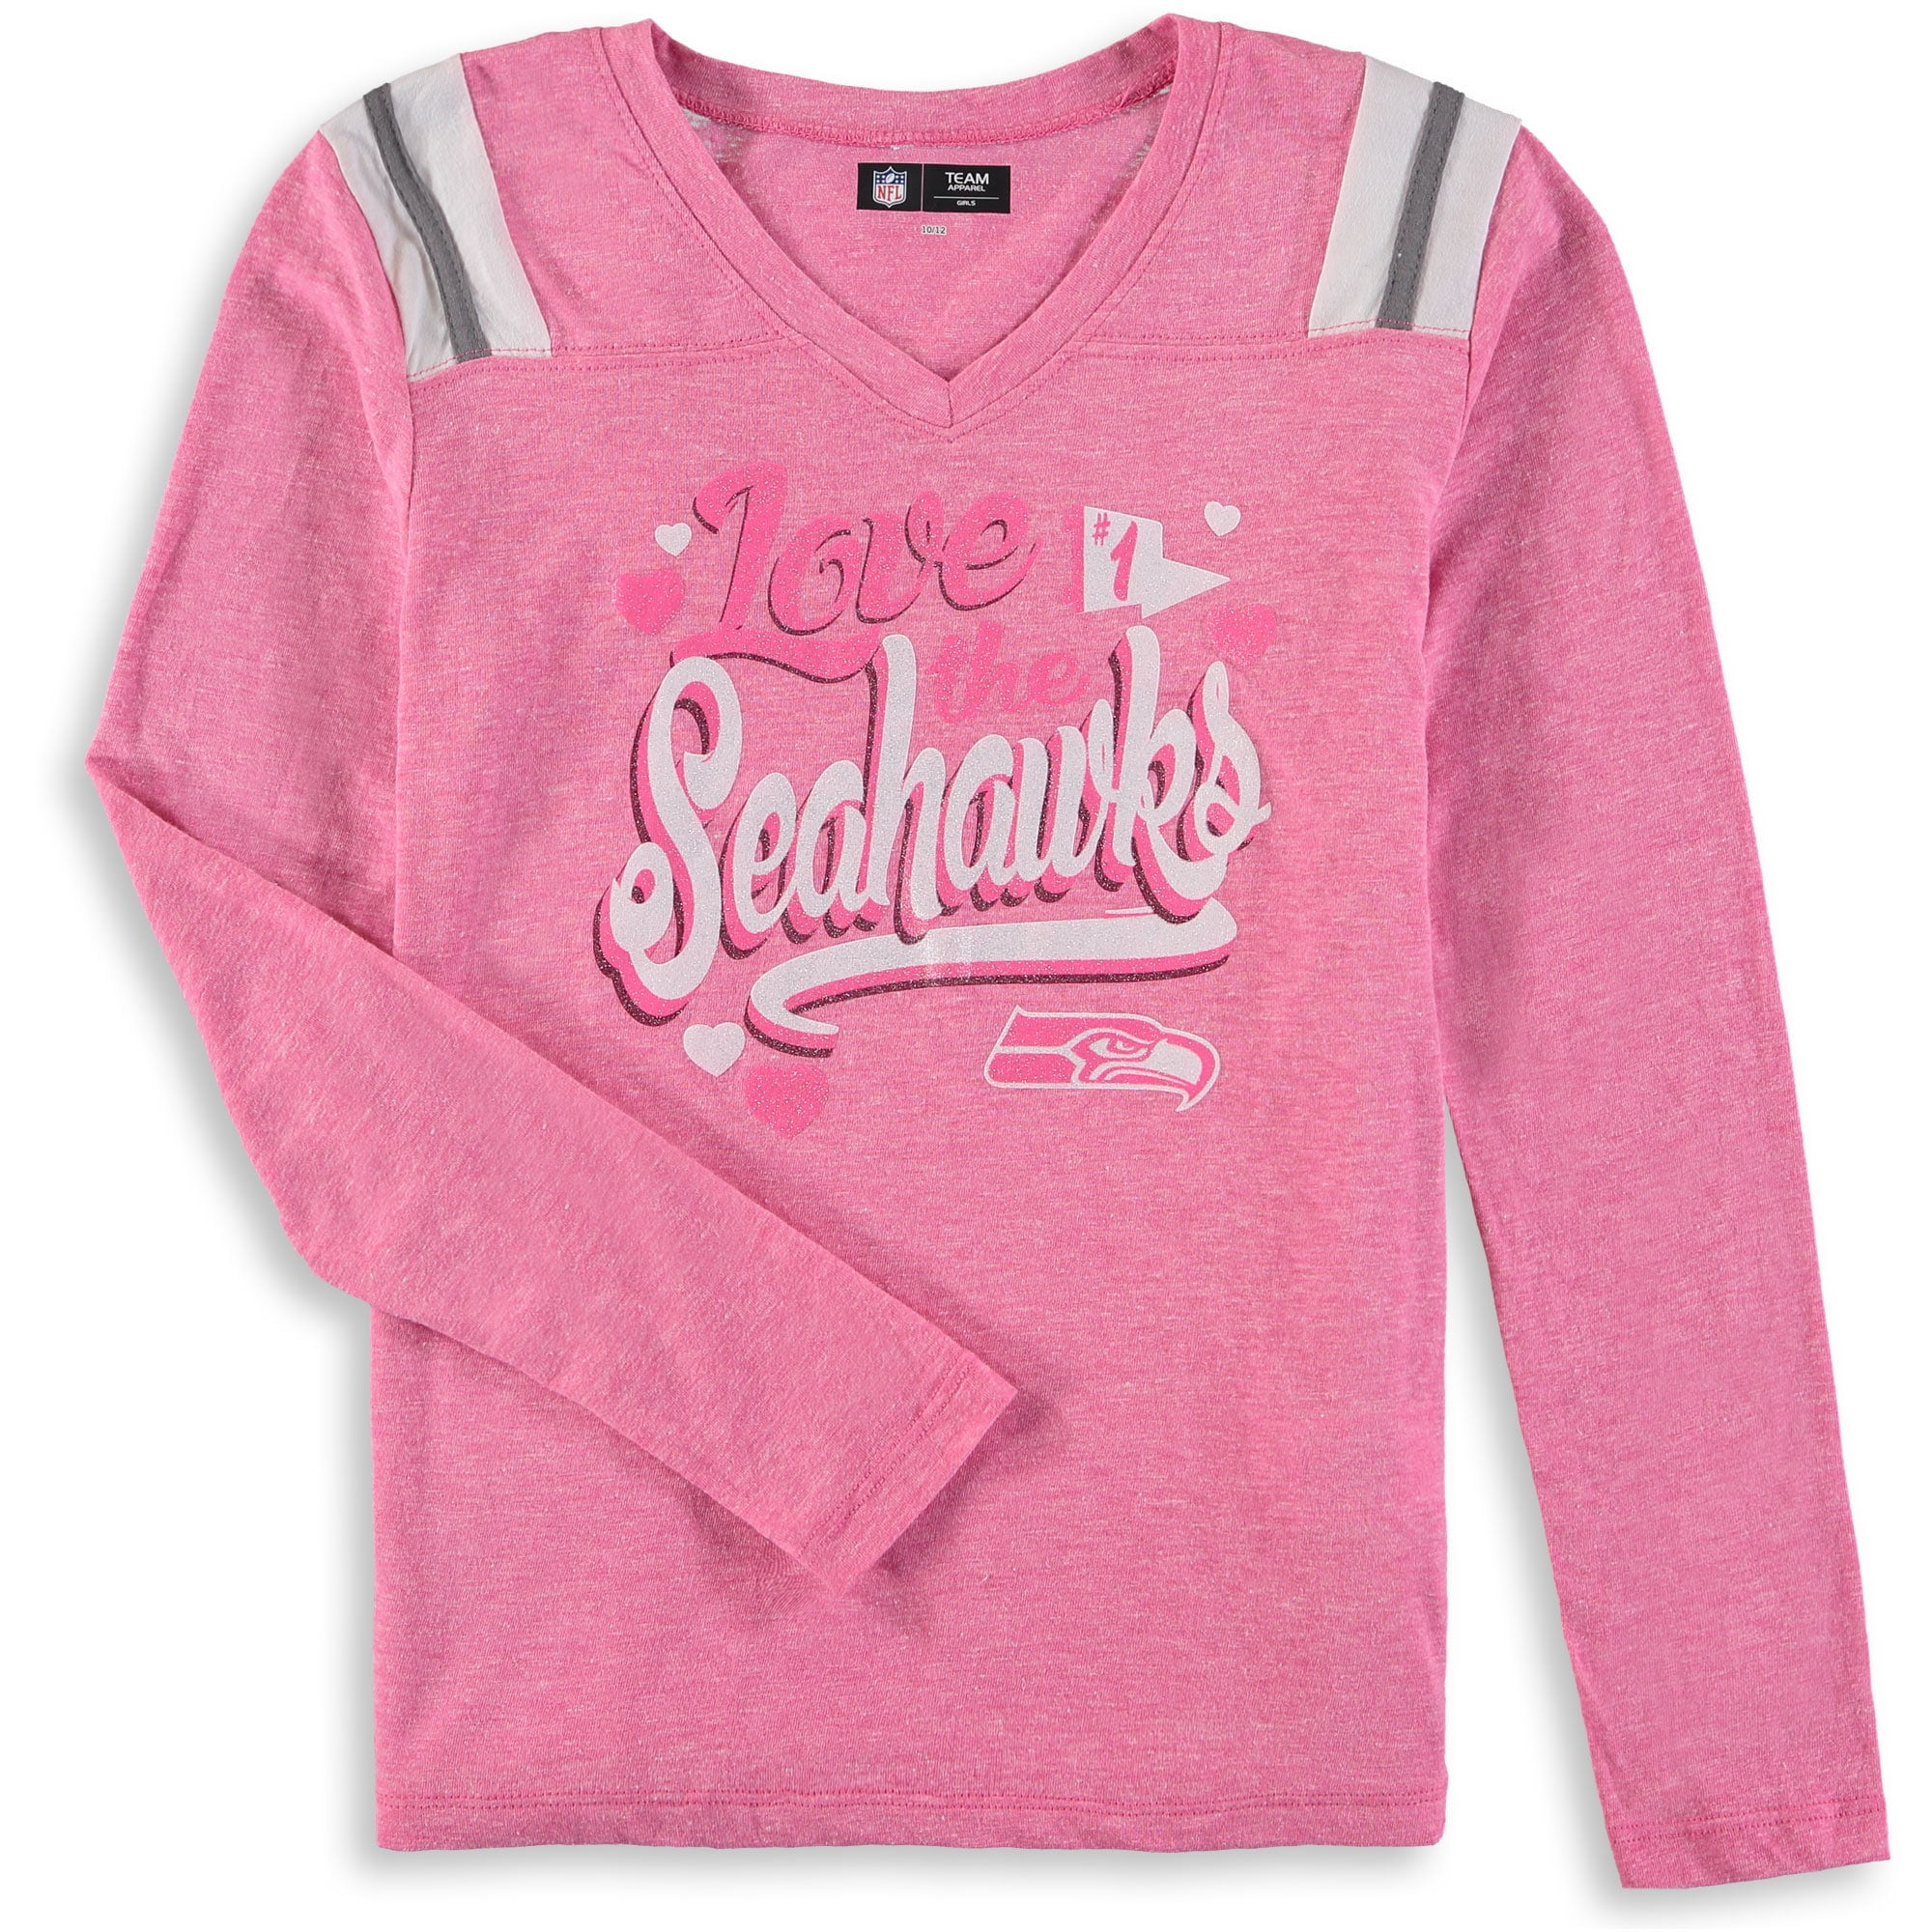 pink seahawks shirt